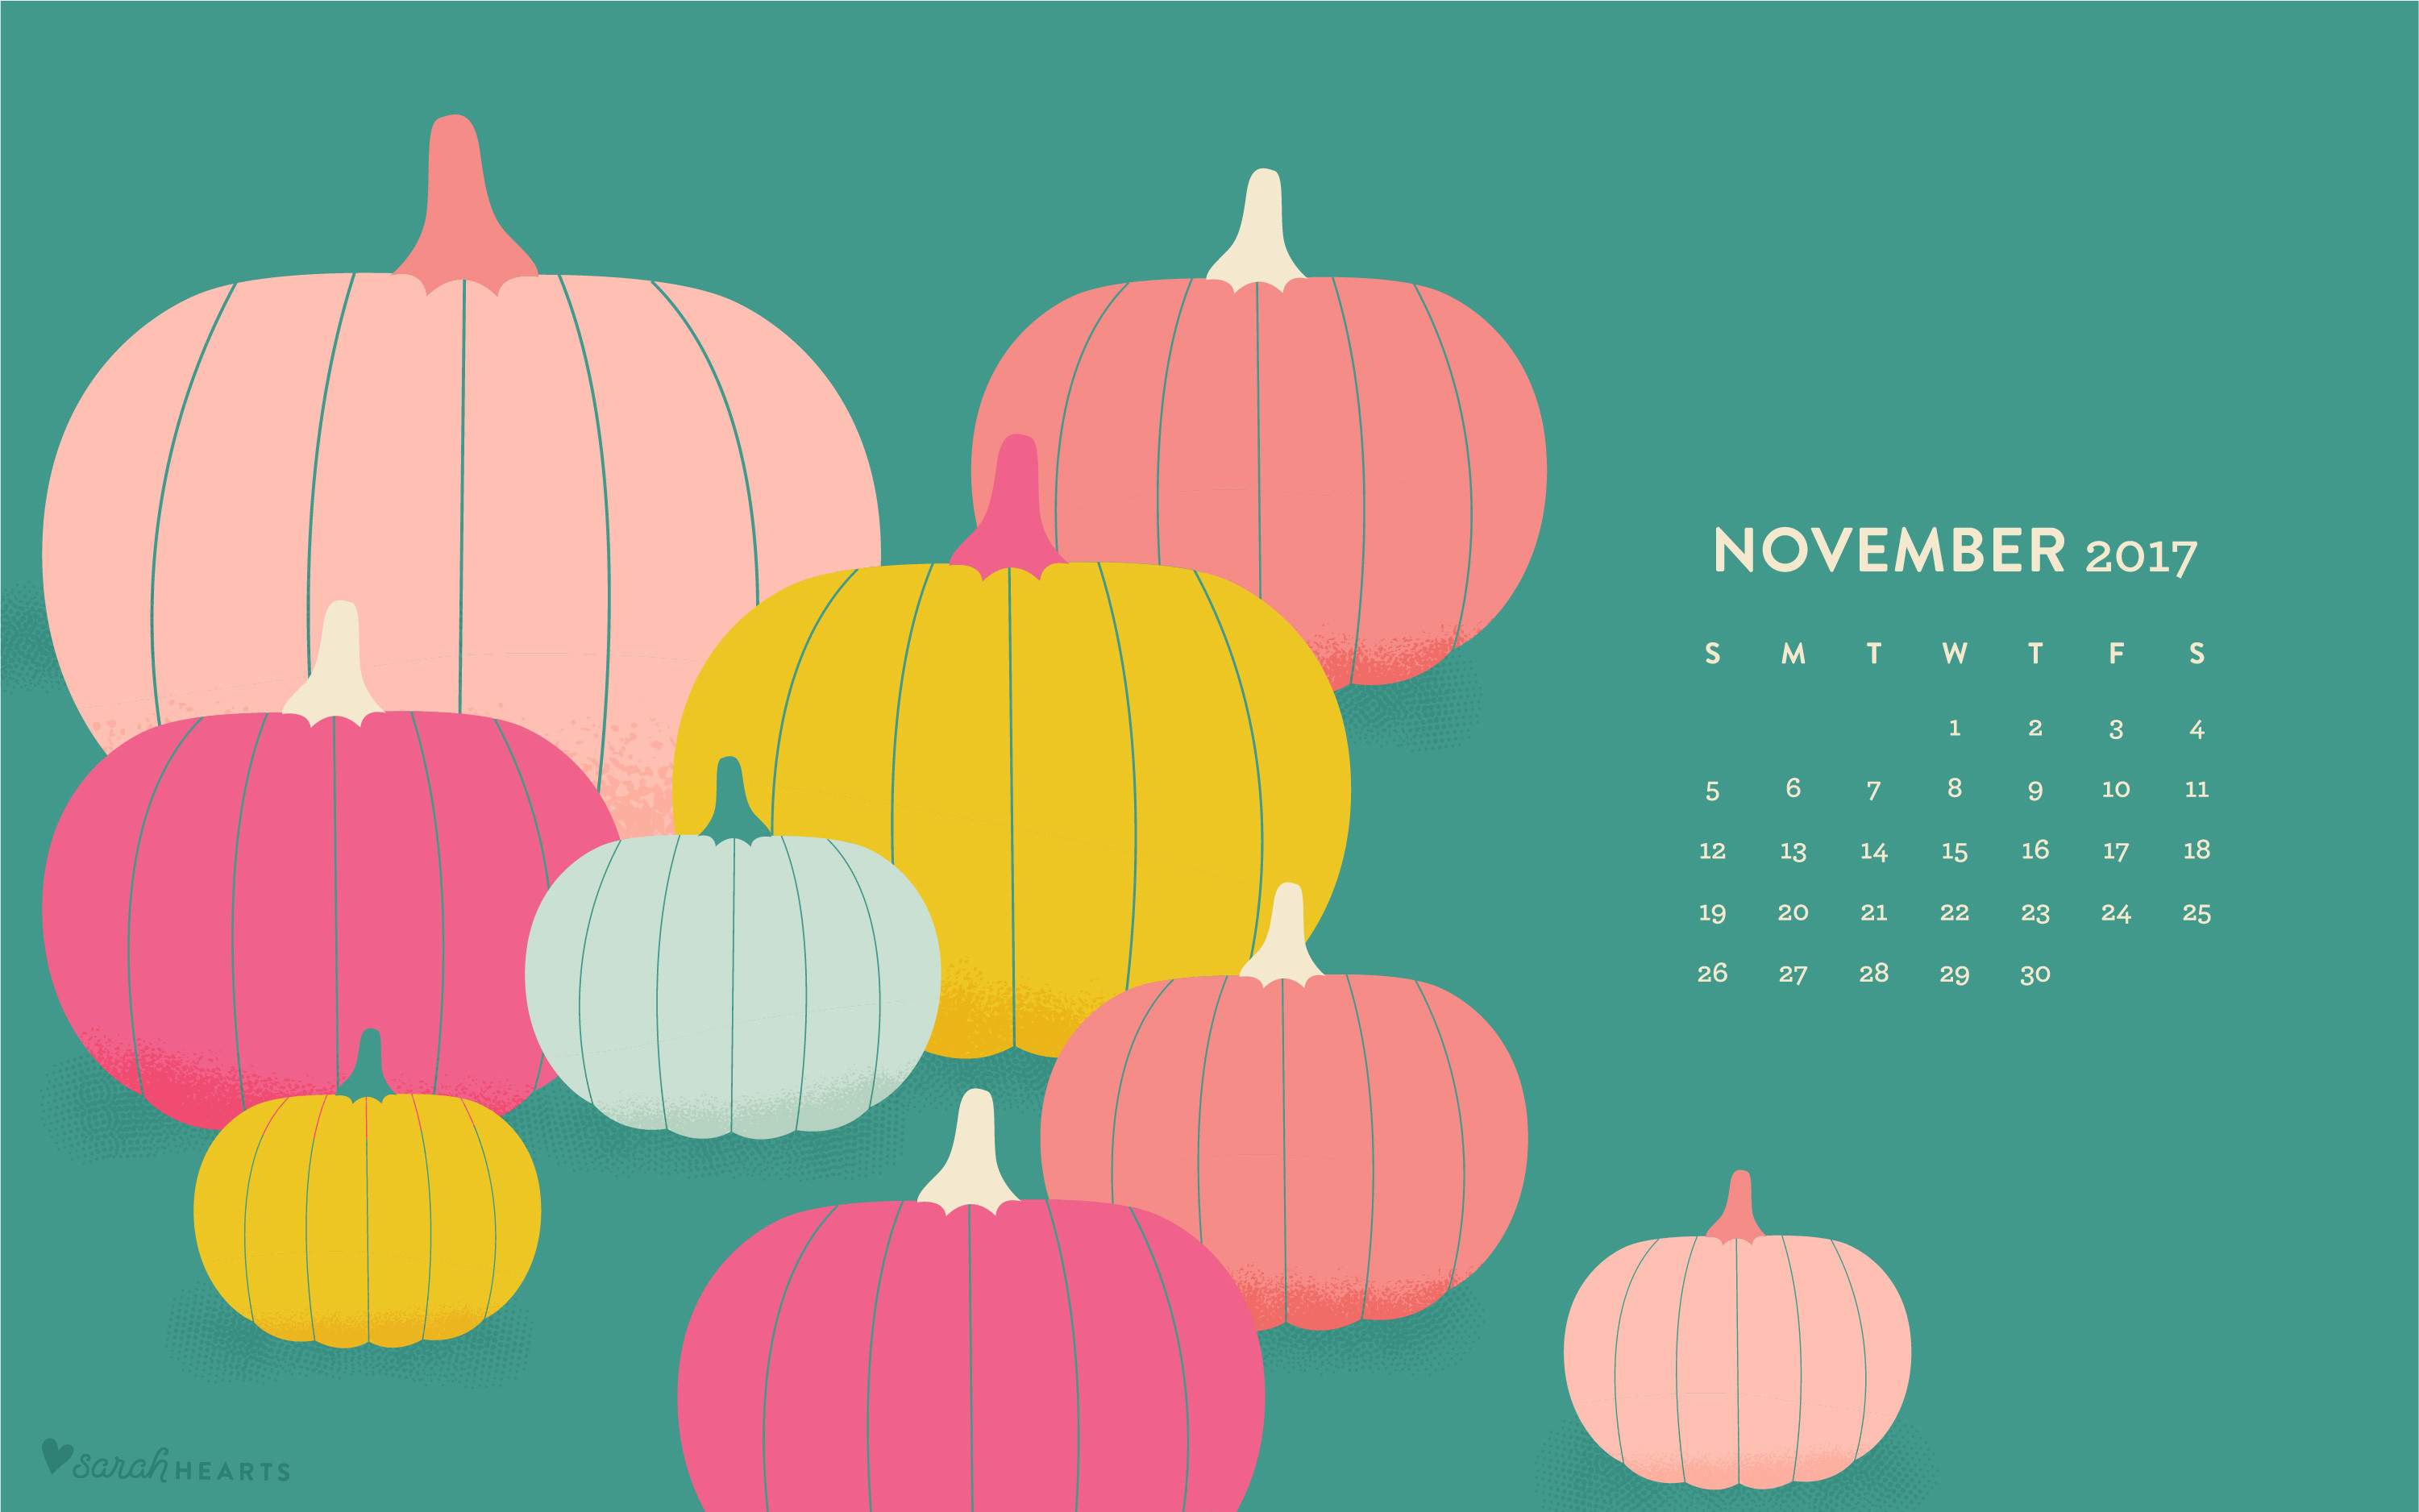 calendar-november-2017-uk-bank-holidays-excel-pdf-word-templates